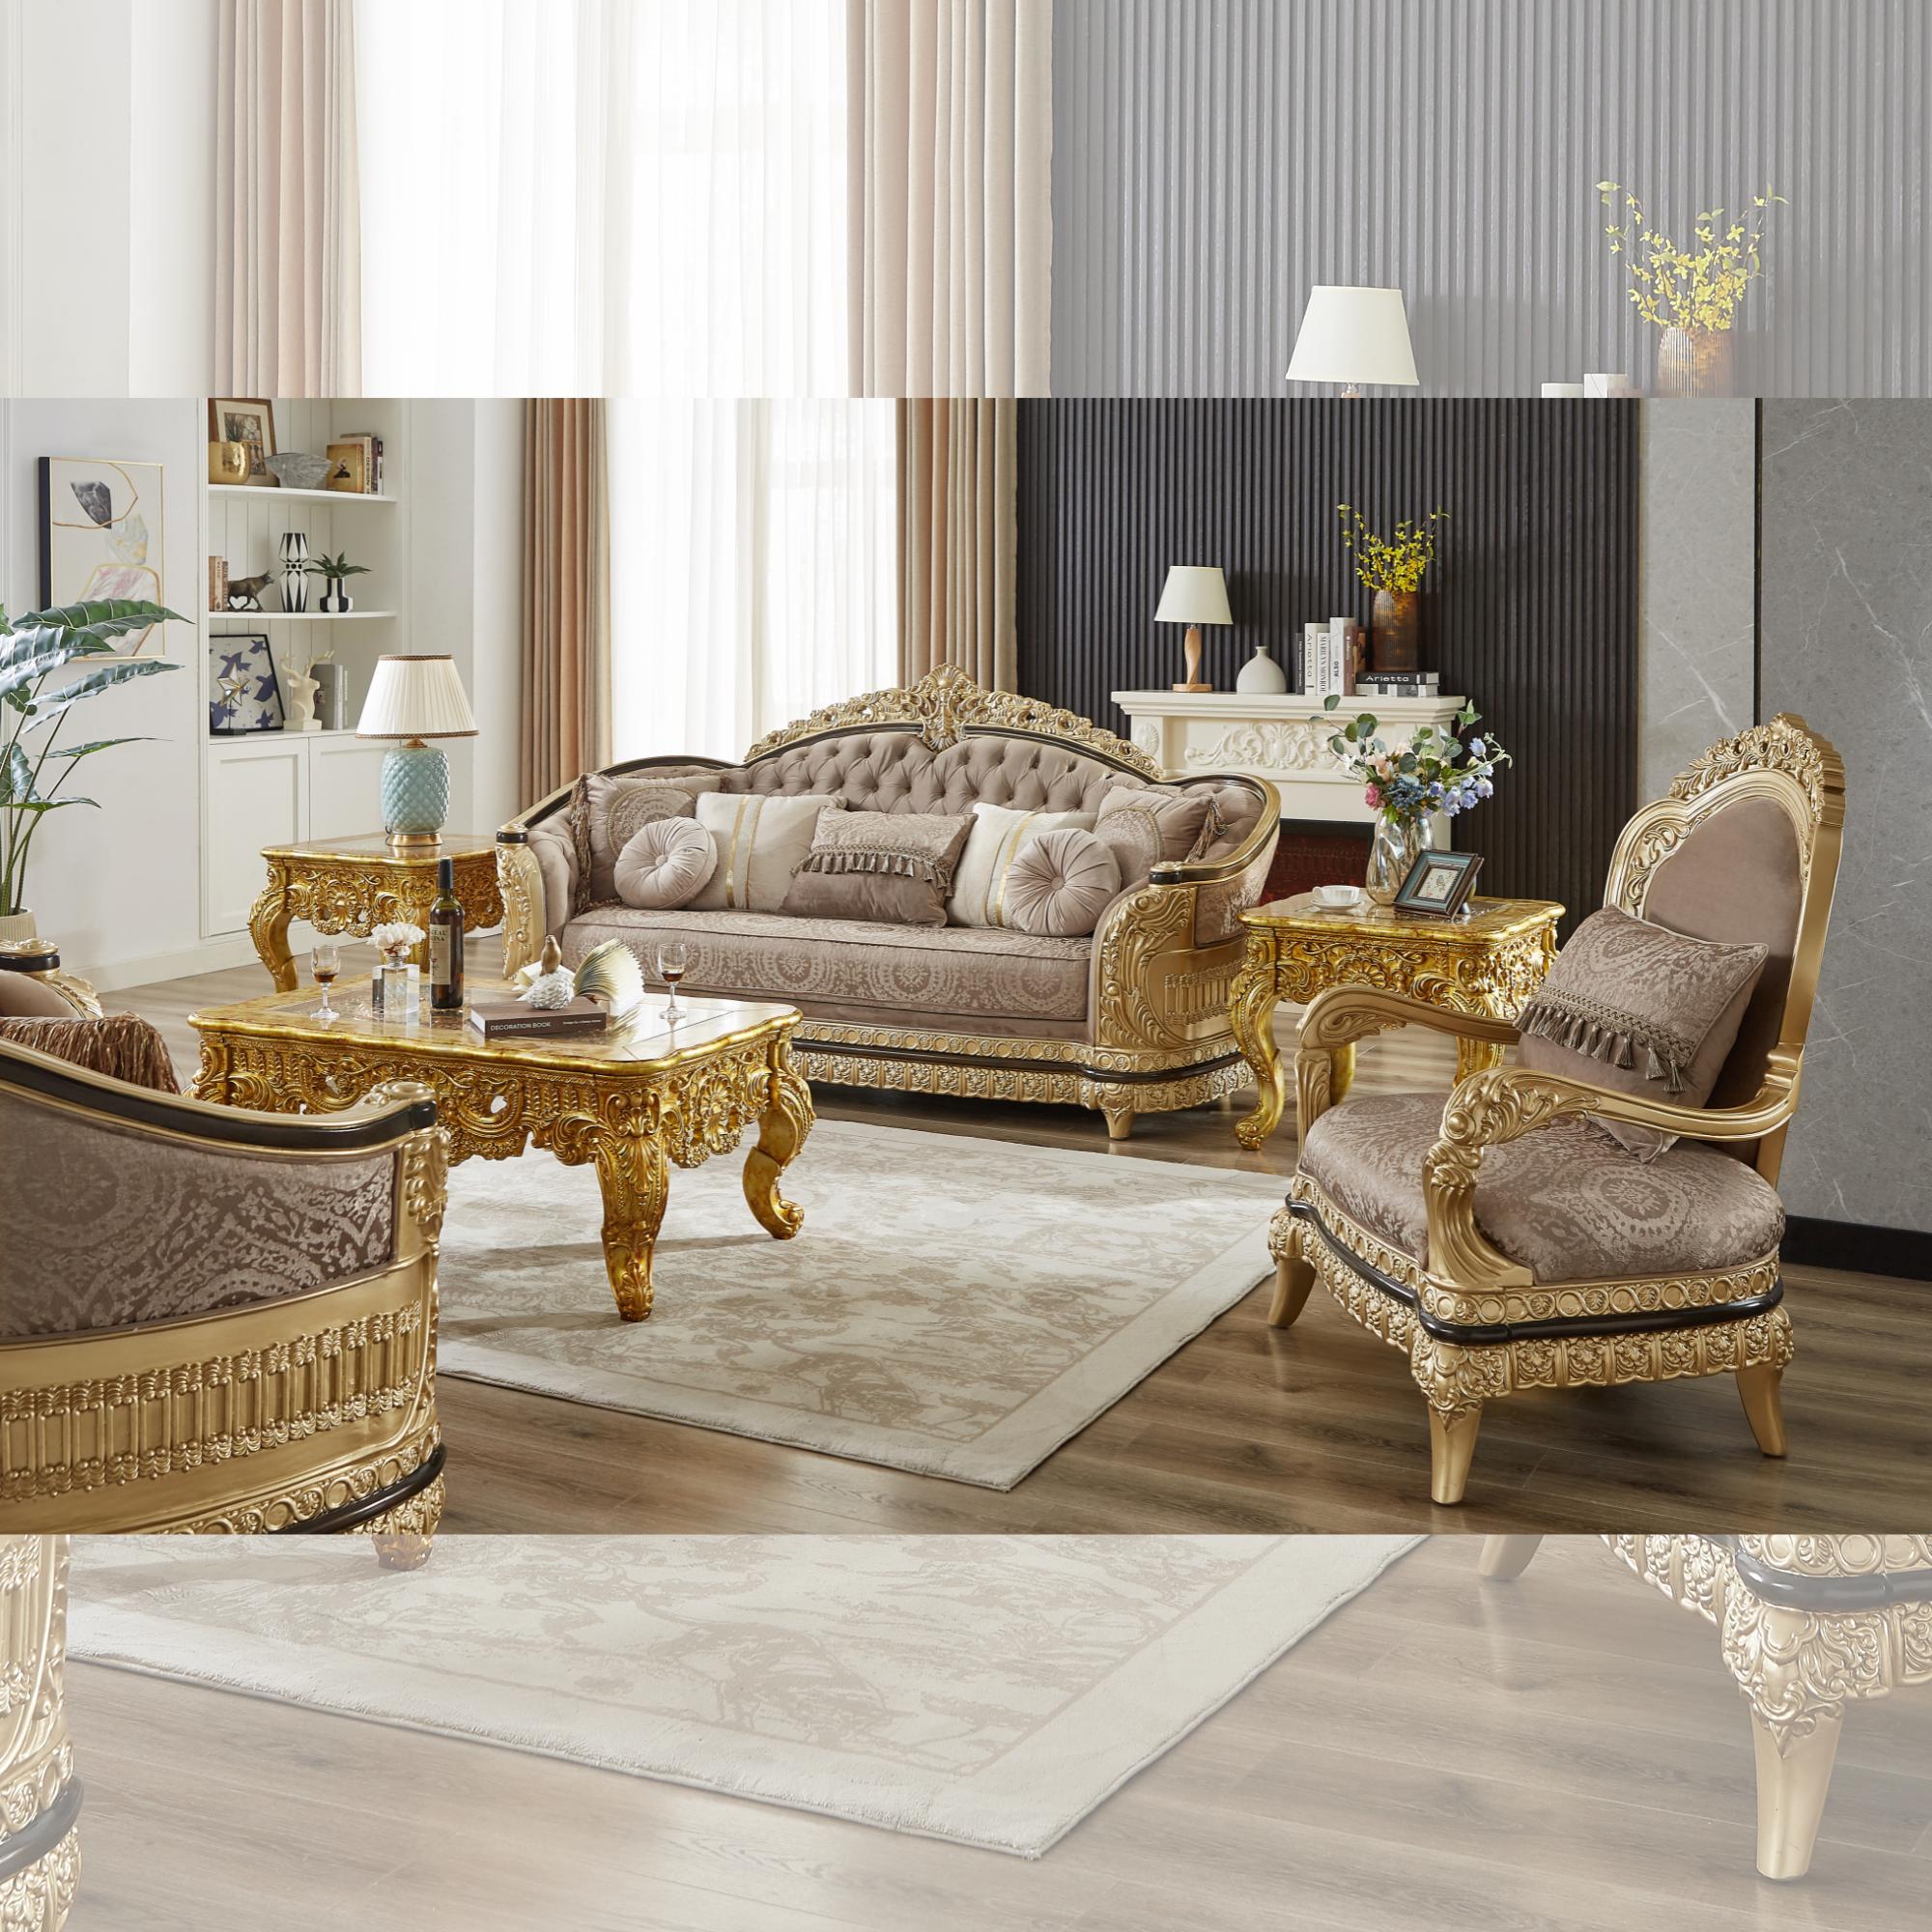 Classic, Traditional Living Room Set HD-9021 Living Room Set 3PCS HD-3PC9021 HD-3PC9021 in Gray, Gold Fabric